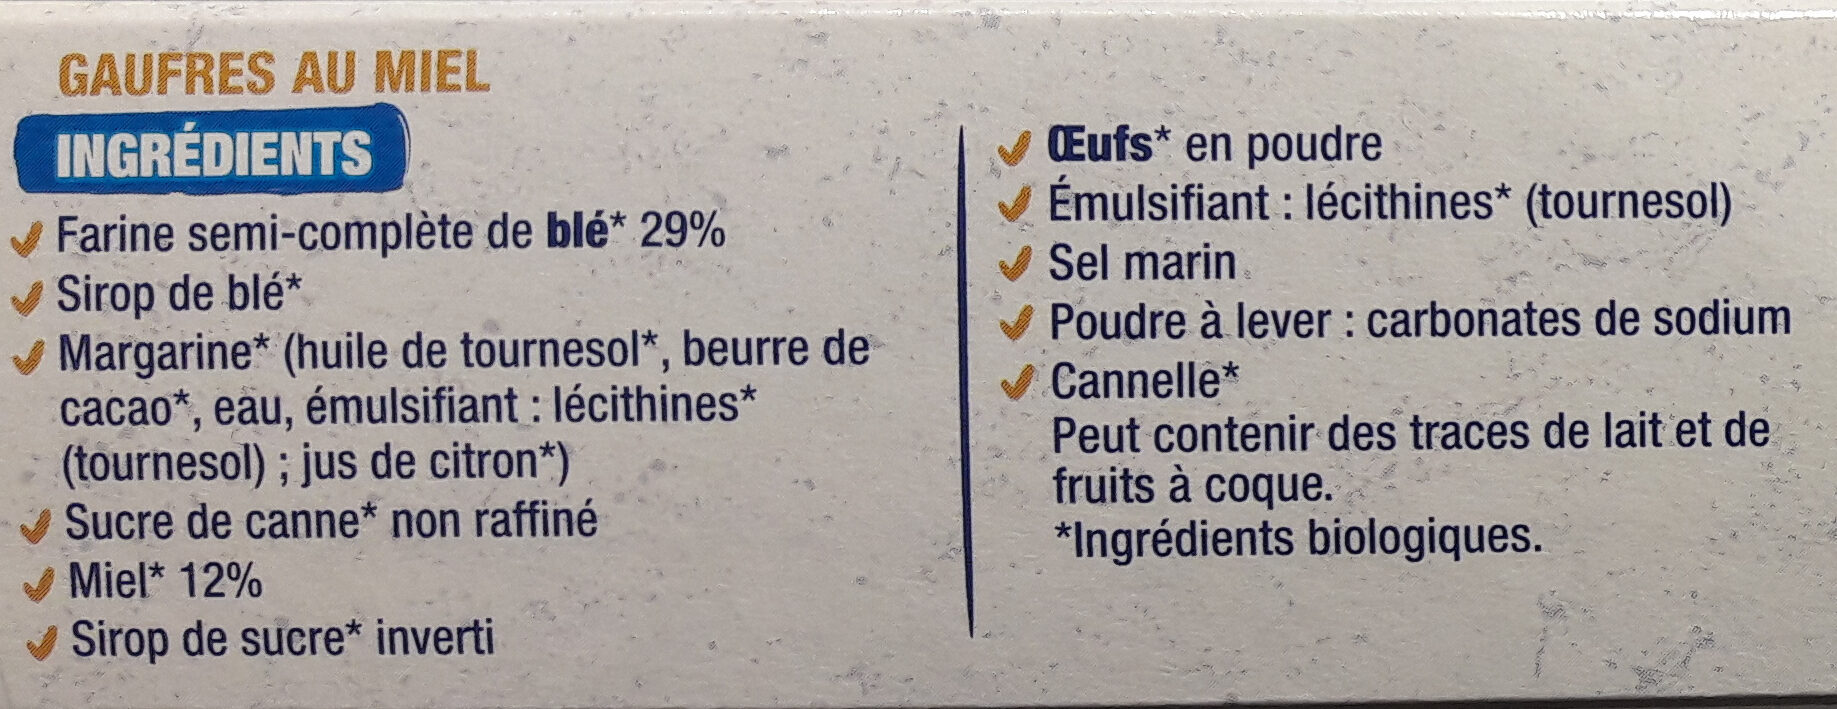 Gaufres Miel - Ingredients - fr